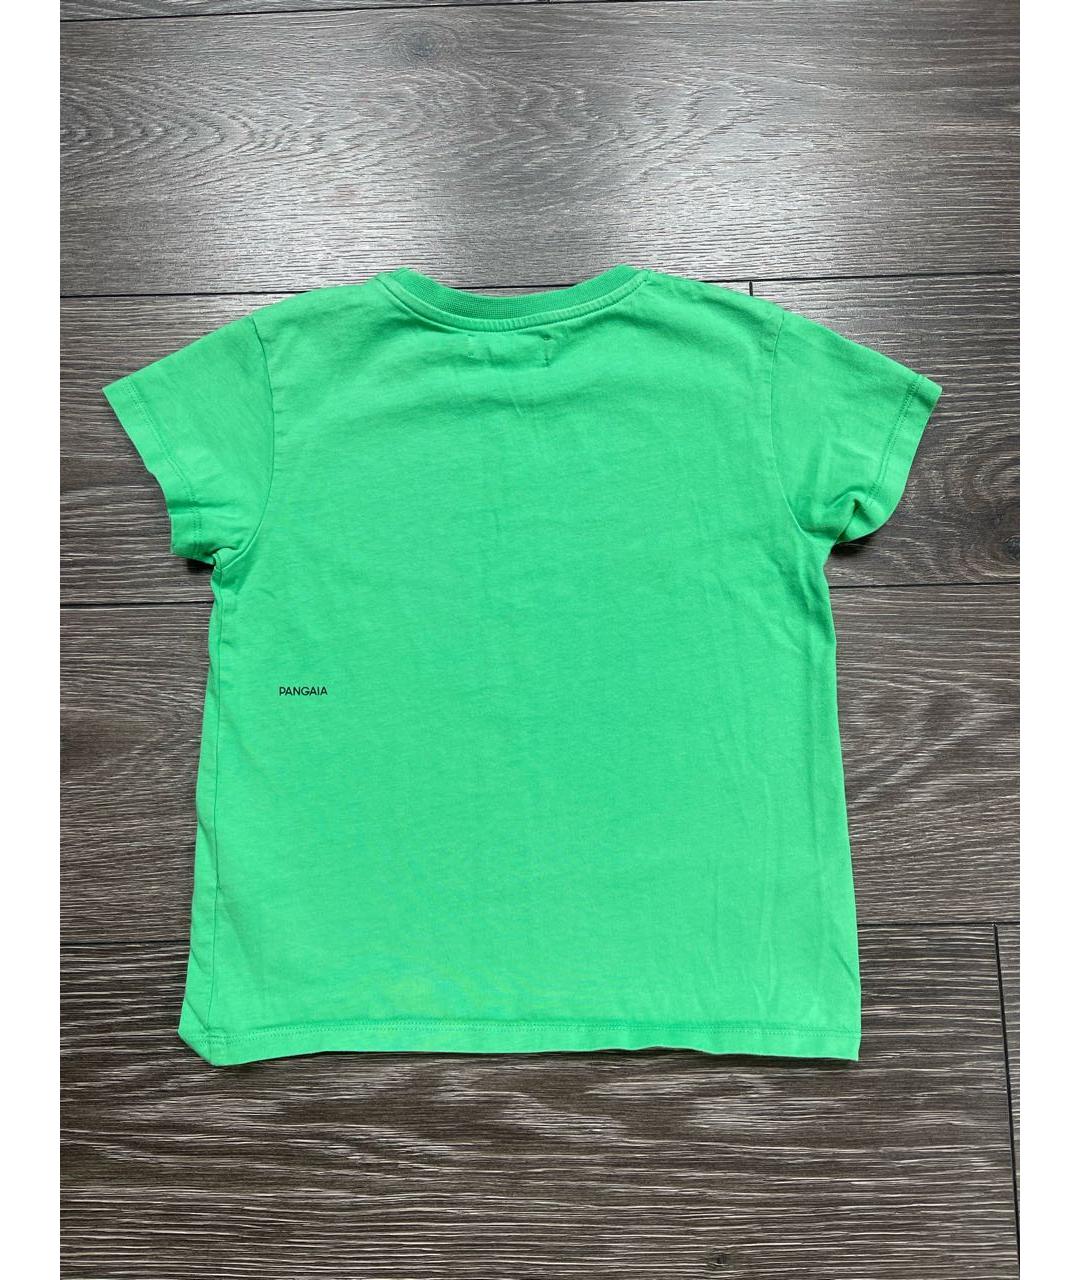 THE PANGAIA Зеленая детская футболка, фото 2